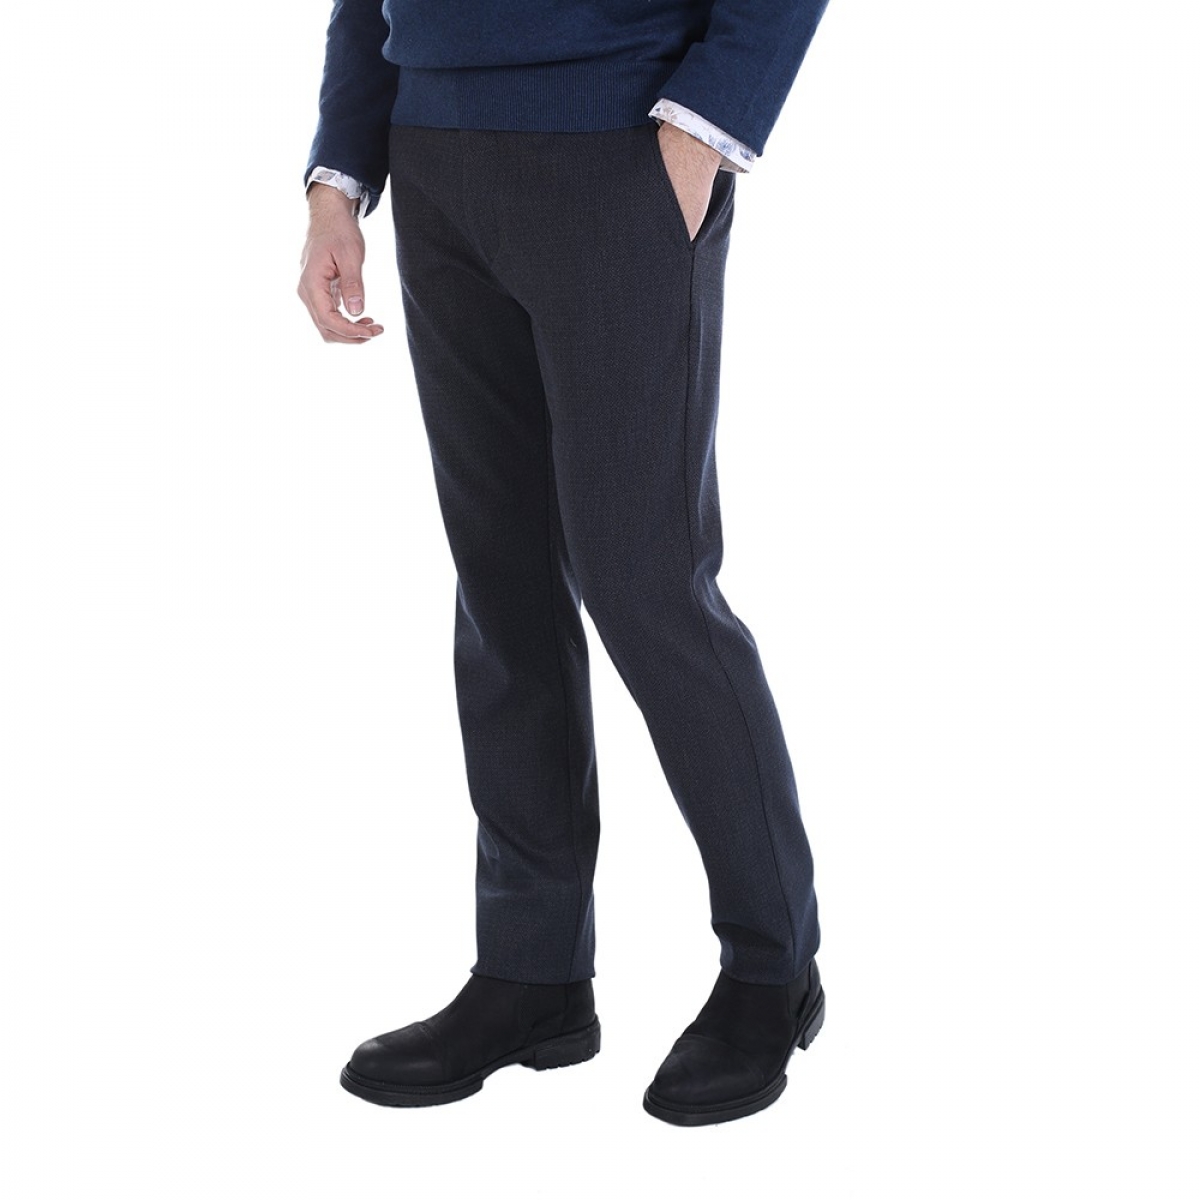 Flo Kışlık Erkek Pantolon Lacivert/Navy 2023006. 2